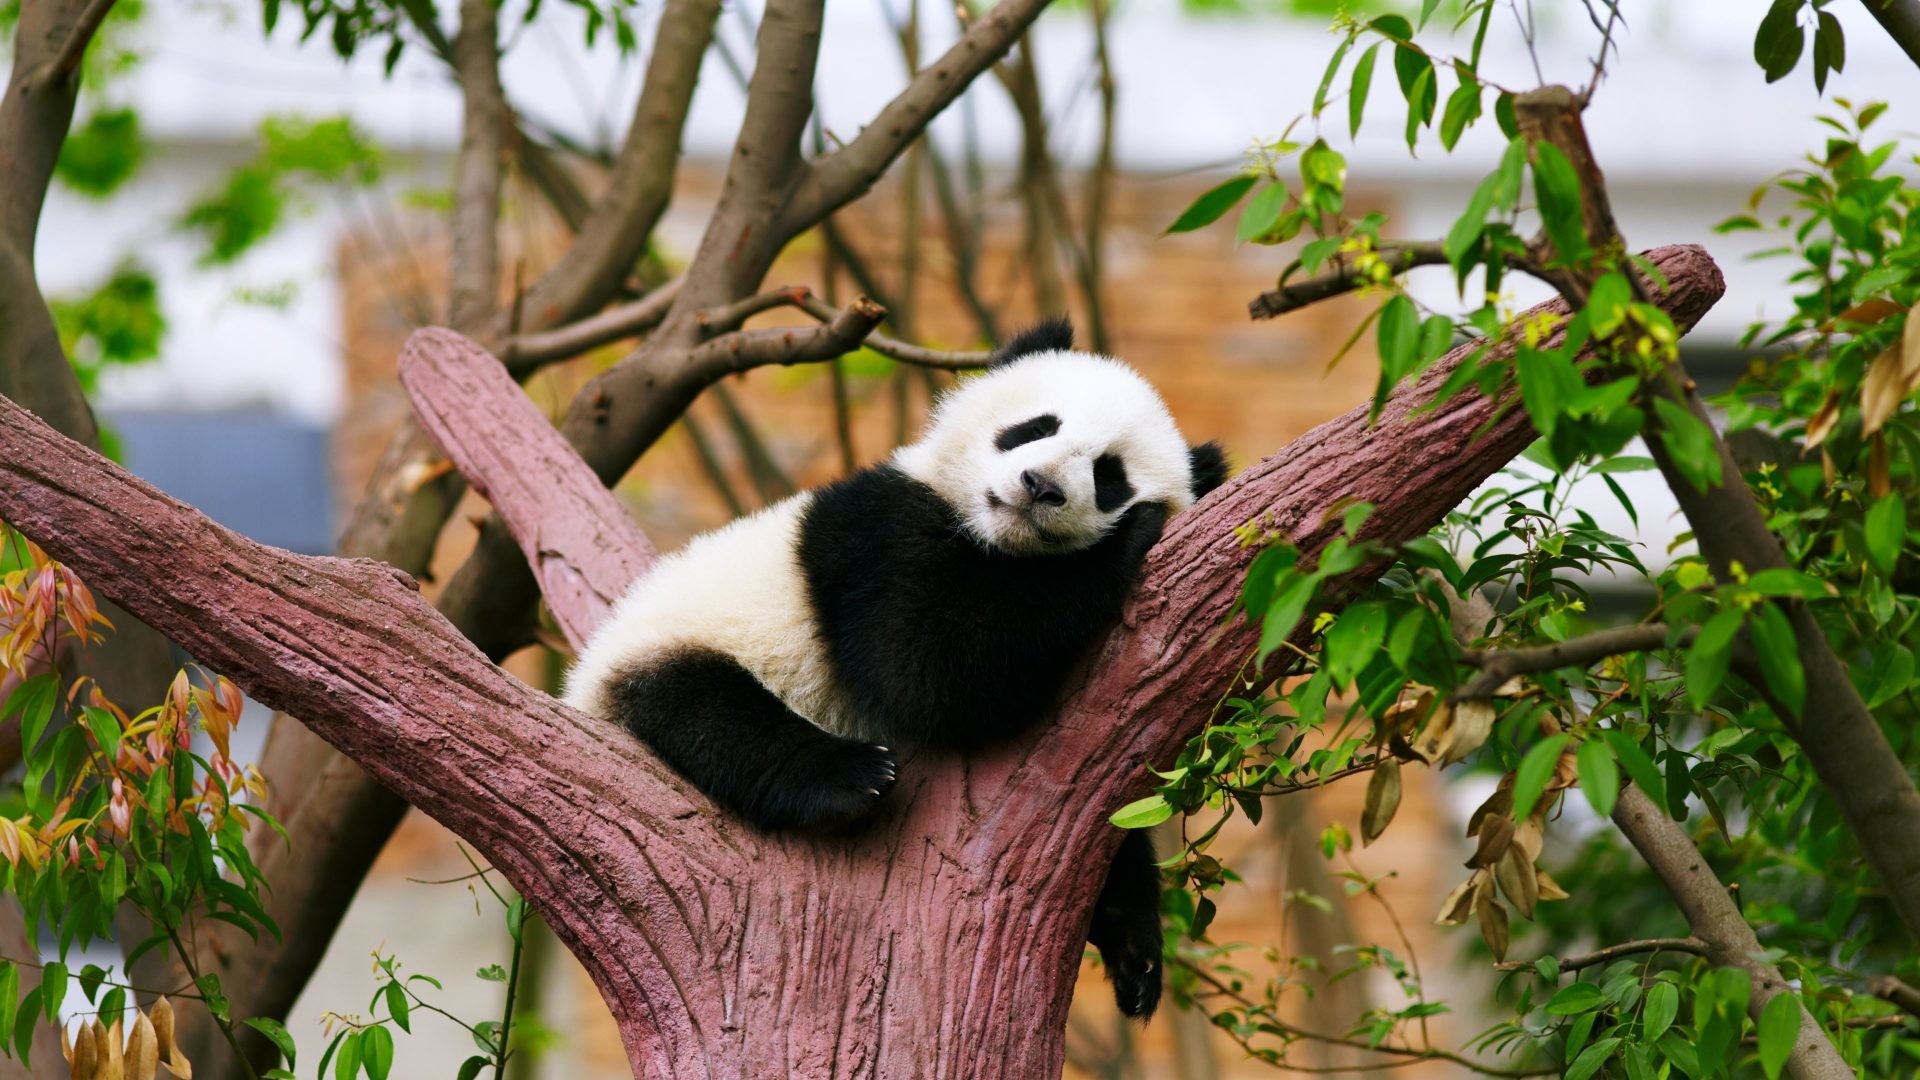 1920x1080 Panda Tag - Relax Panda Baby Animals Zoo Bear Trees Sleepy Rest Photos Hd  Animal for